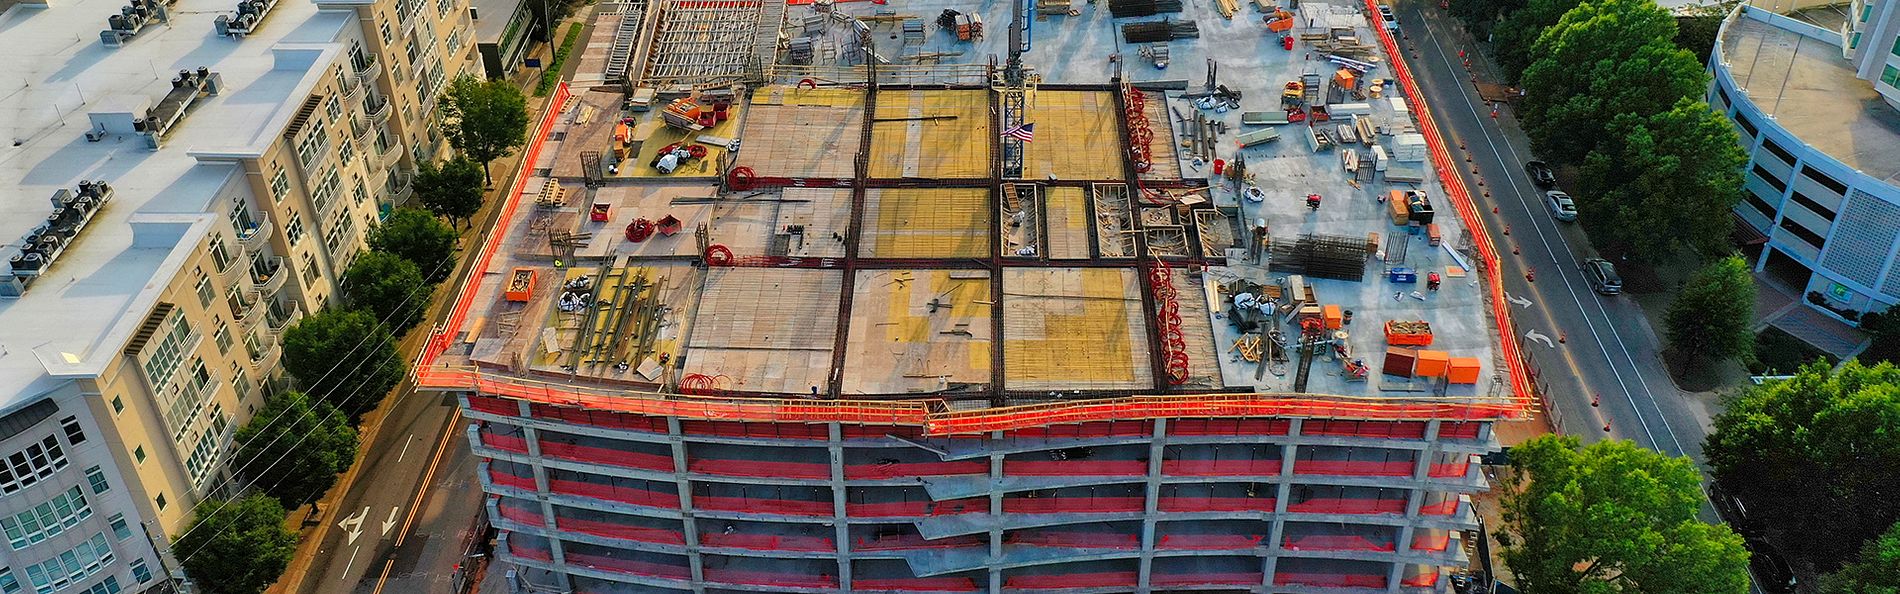 301 Hillsborough Office Building Drone Photo under construction - June 2020